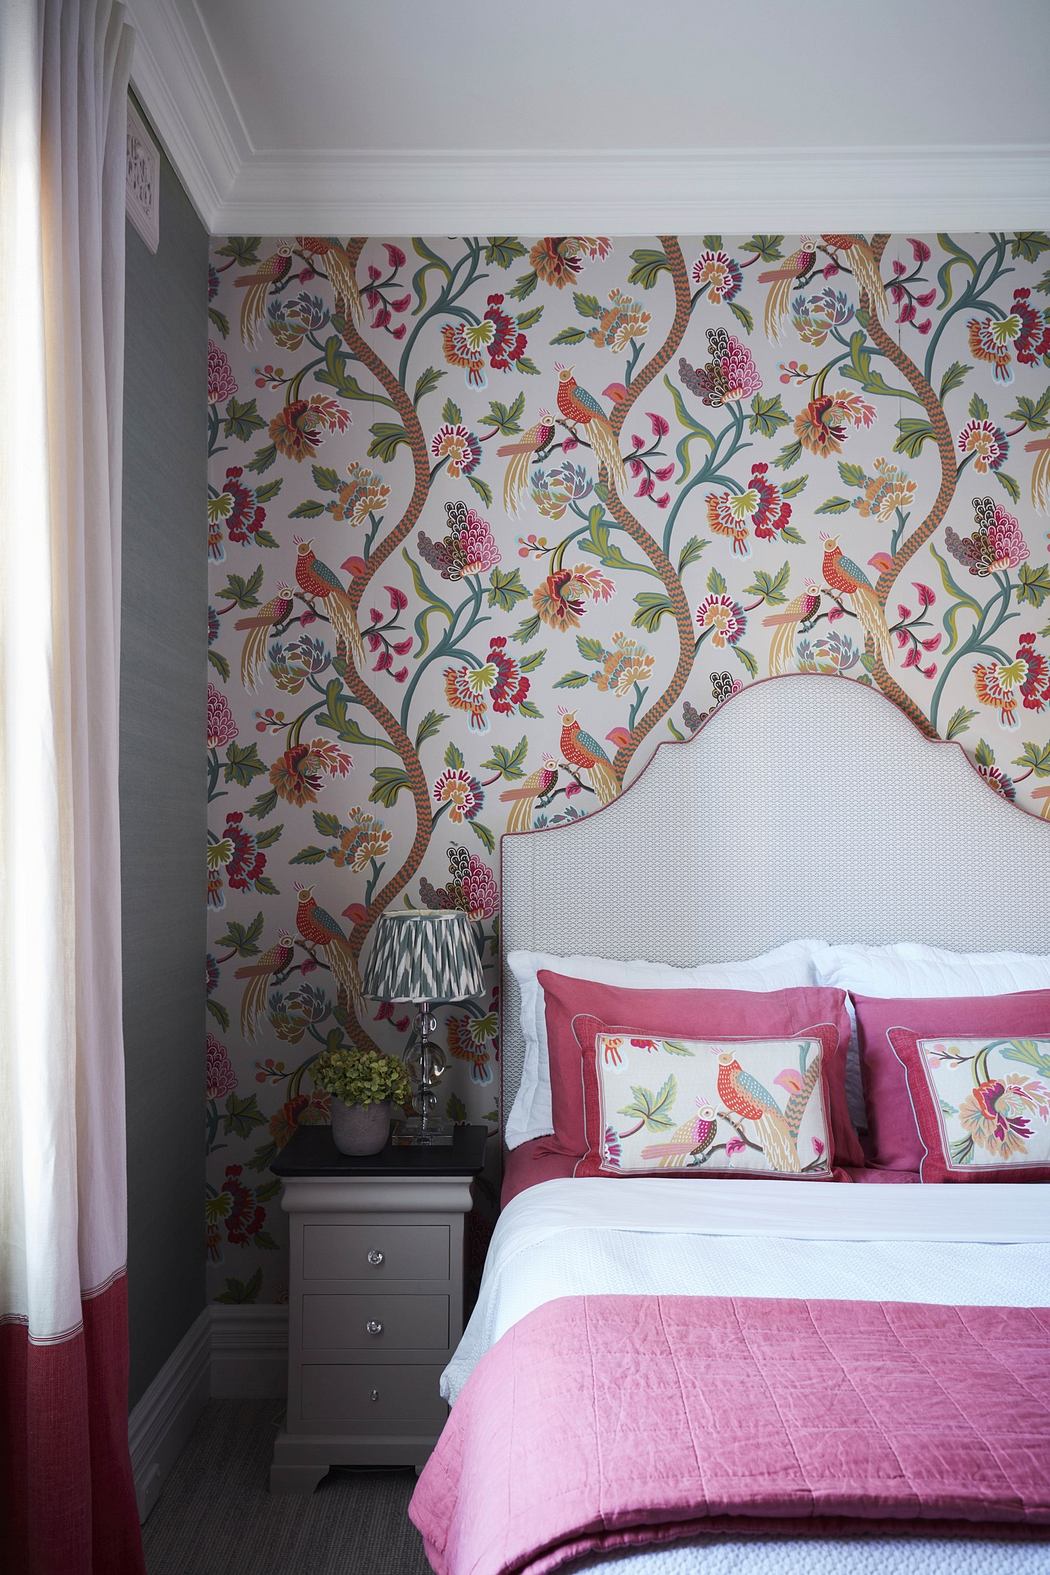 Elegant bedroom with floral wallpaper and pink bedding.